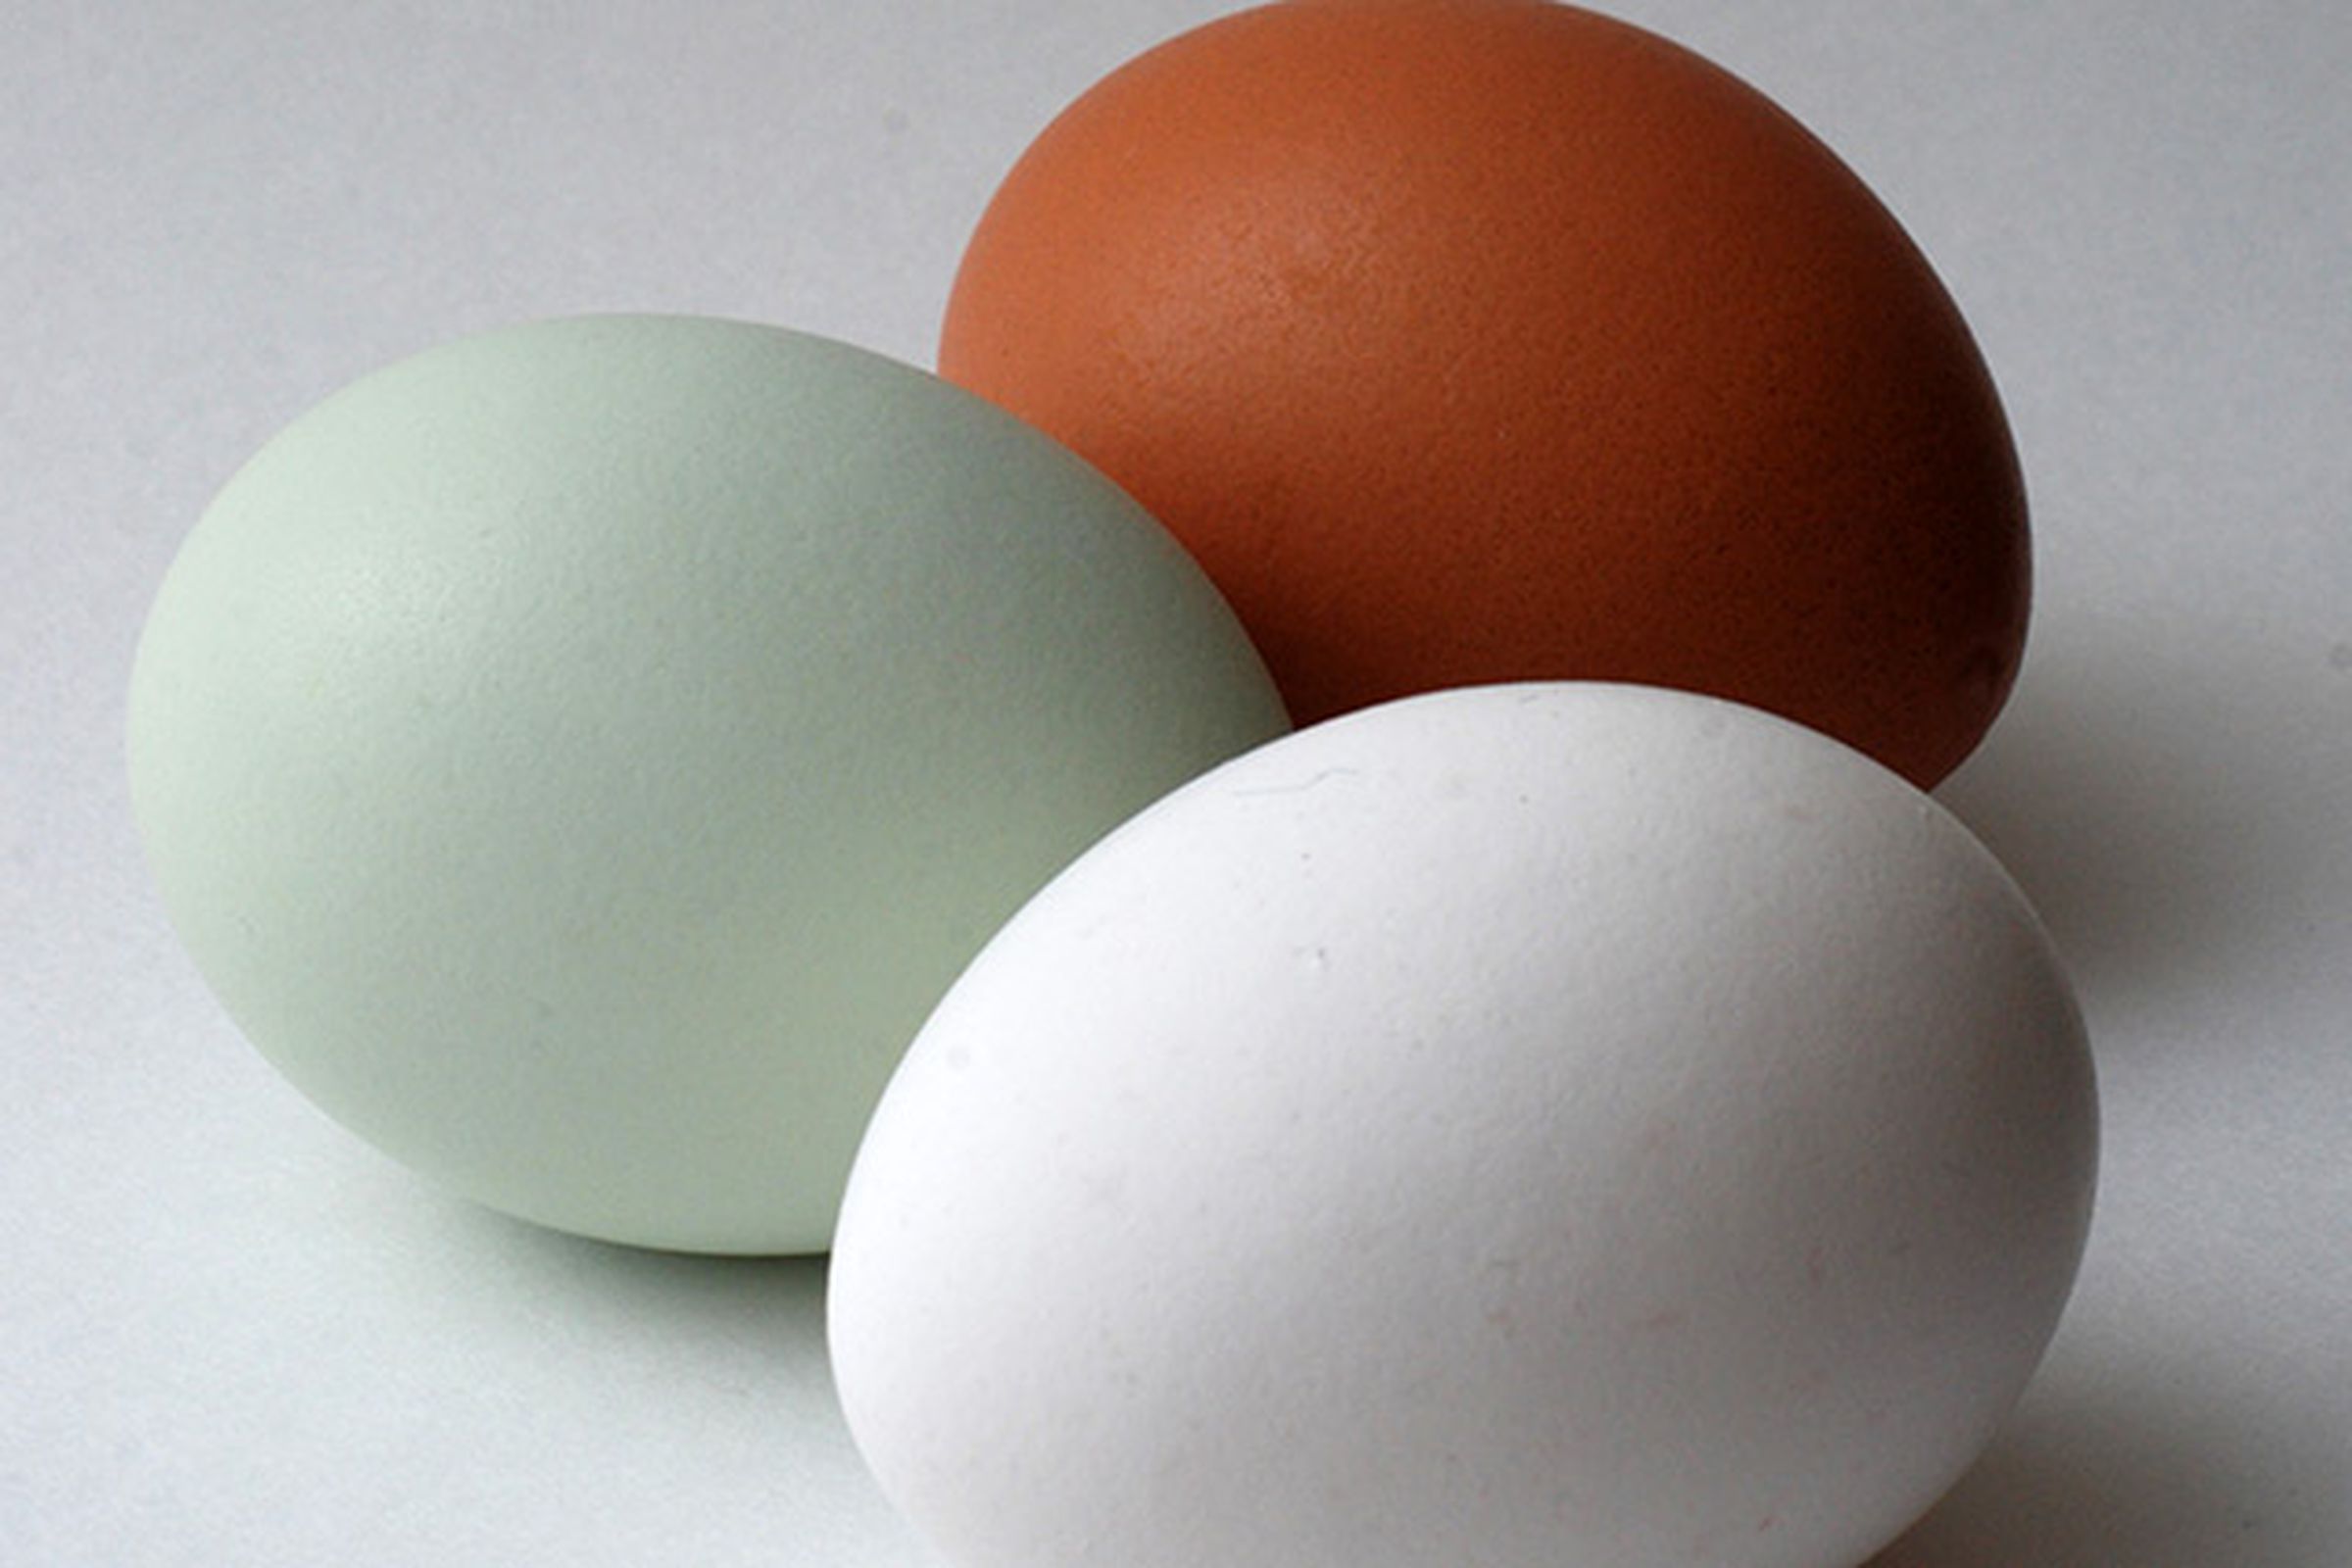 eggs (Wikimedia Commons)